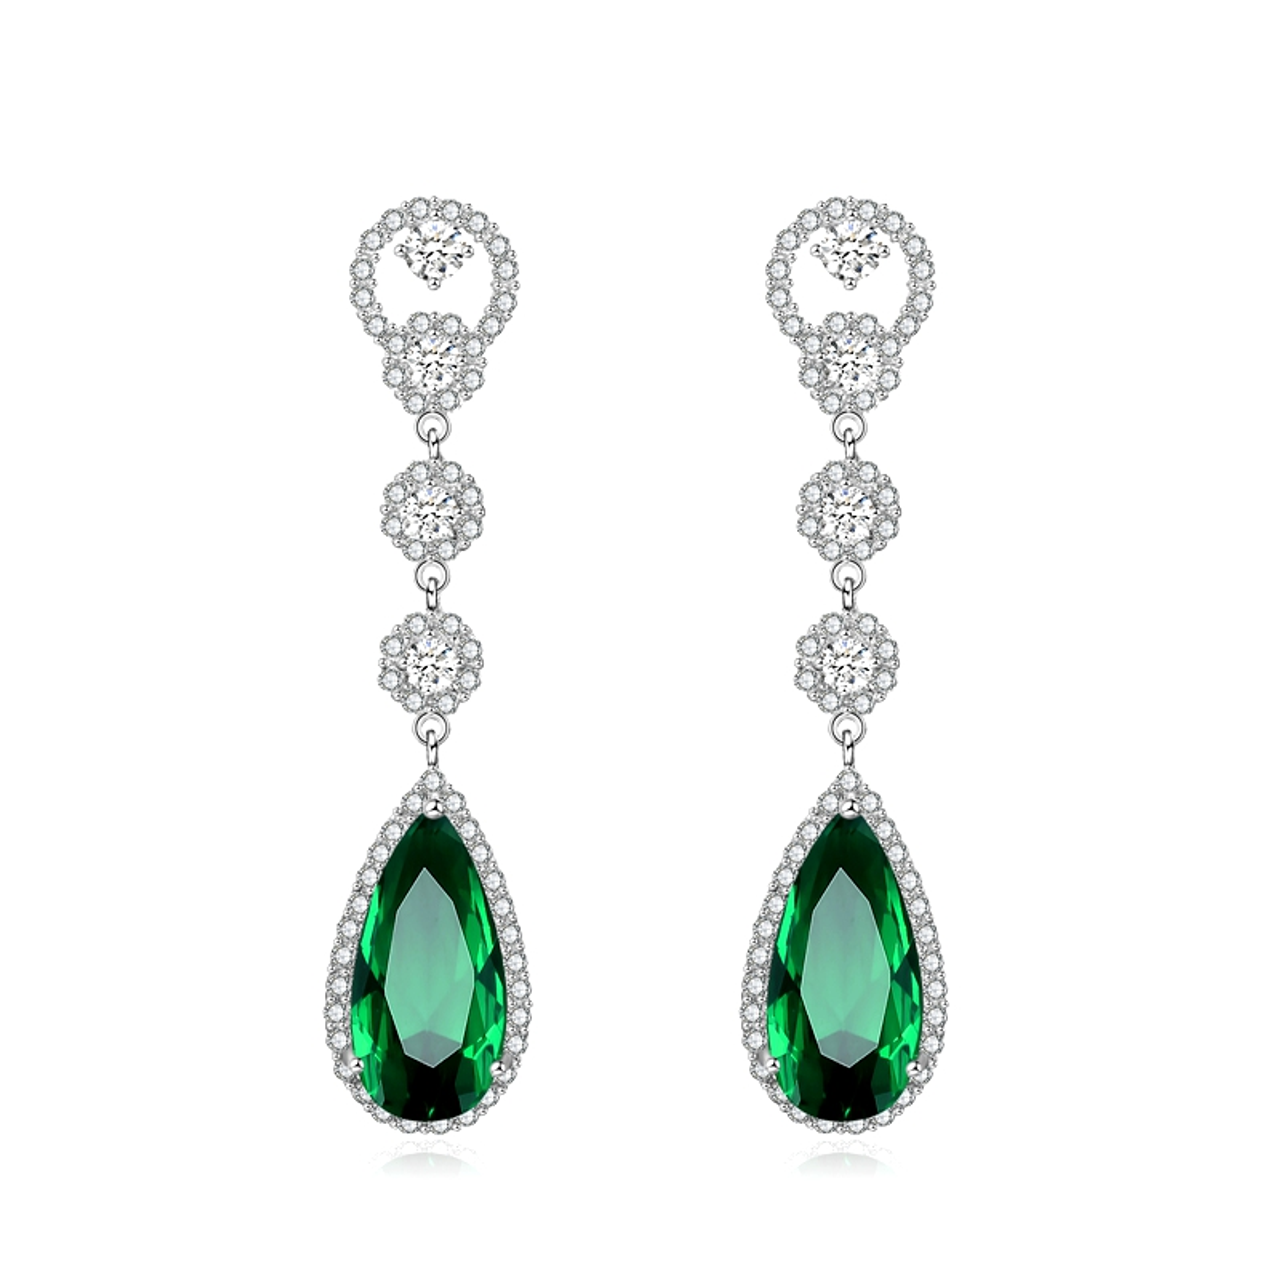 Emerald green drop earrings by Dugri Style | The Secret Label